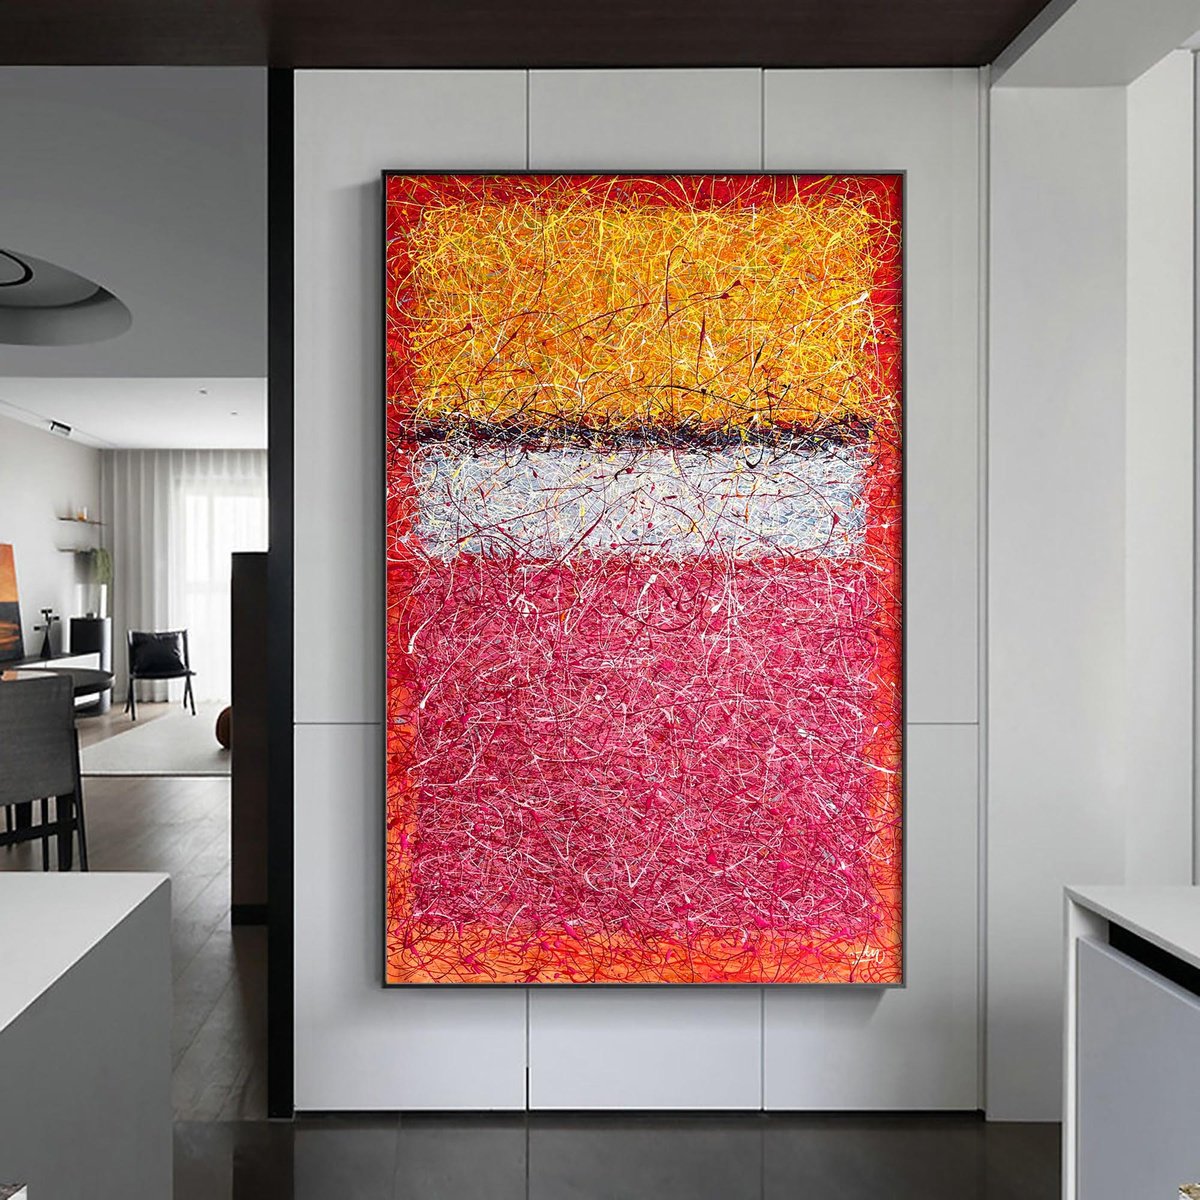 Mark Rothko inspired White Center Jackson pollock style Pink Orange White Modern abstracti... by Nadins ART